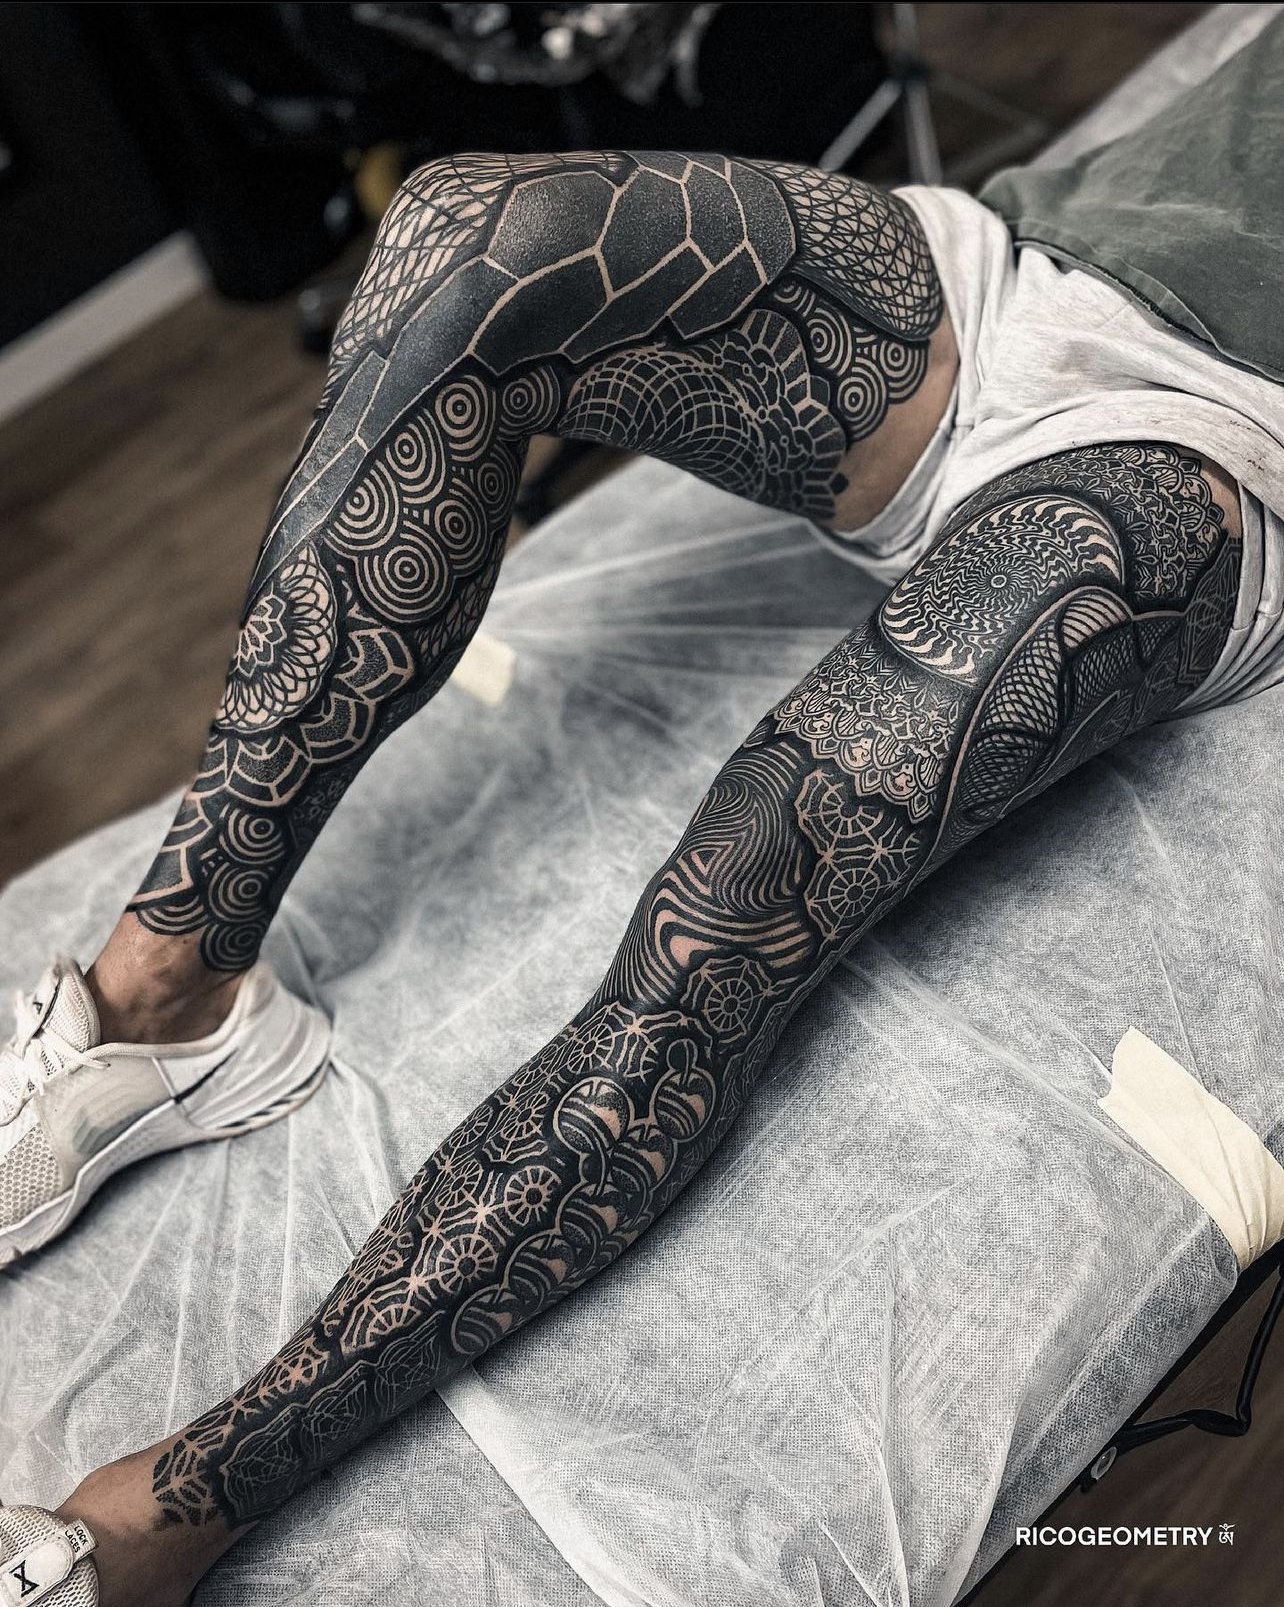 50+ Full leg tattoos Ideas [Best Designs] • Canadian Tattoos